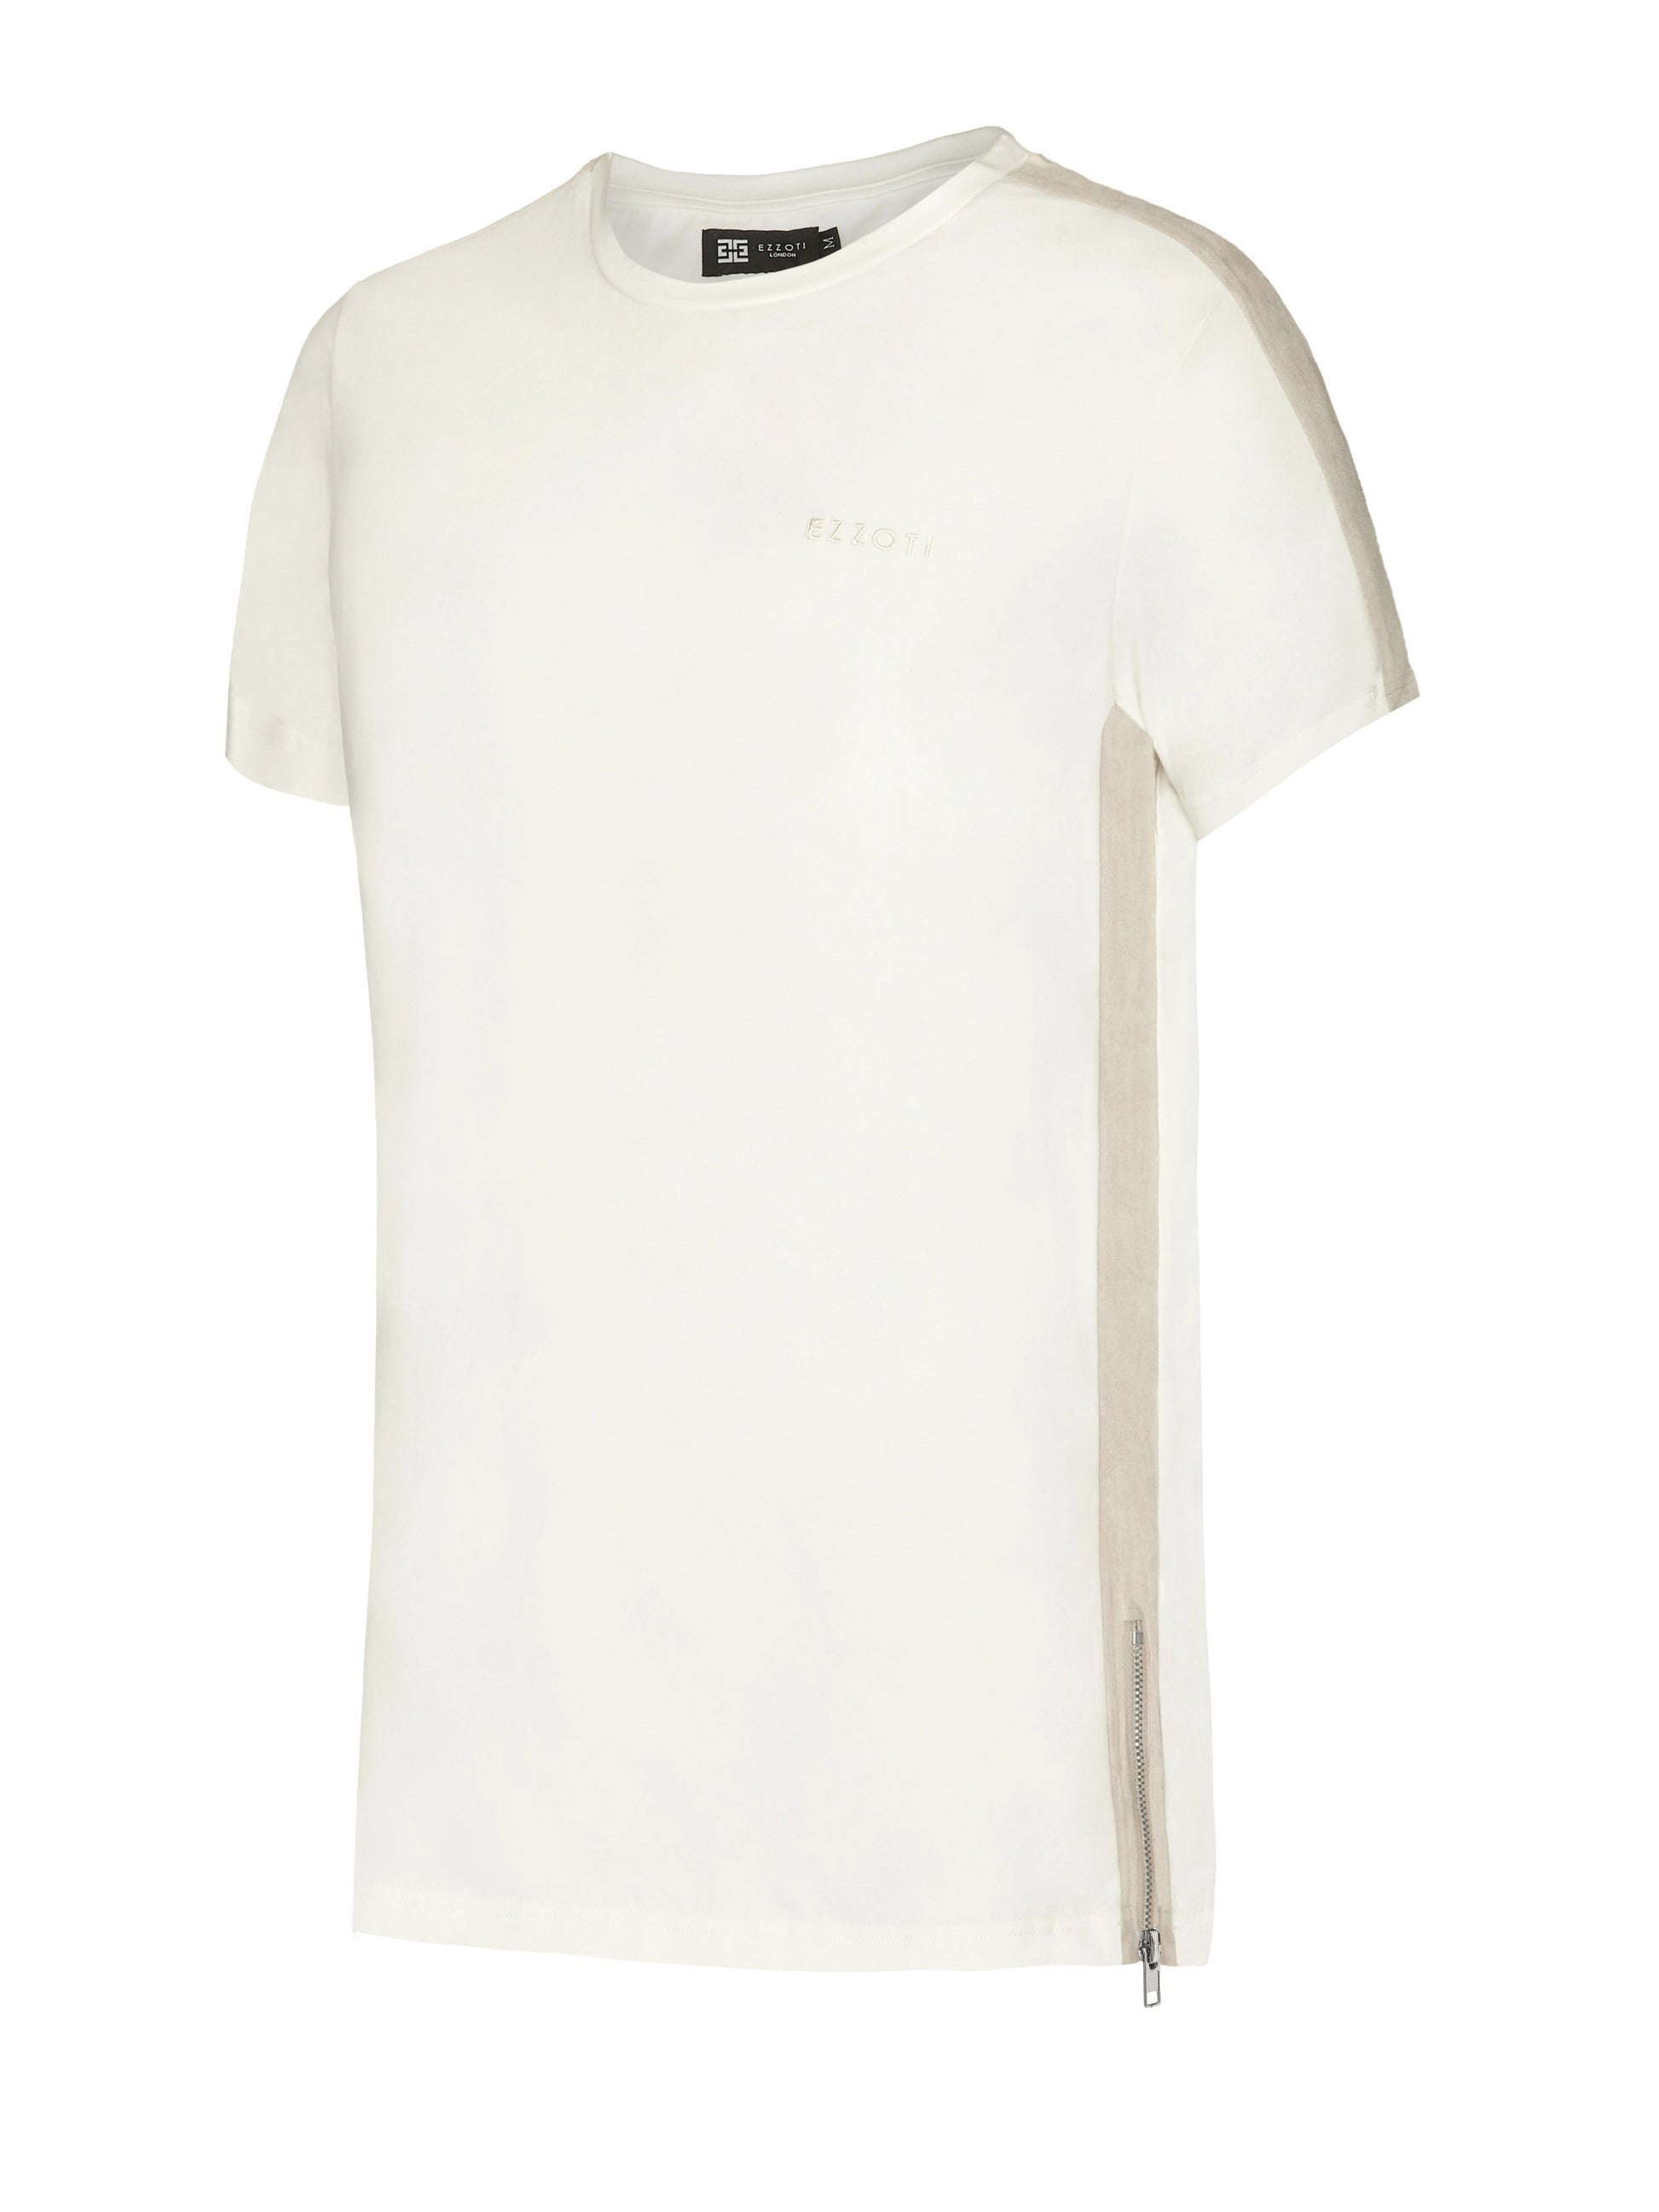 EZZOTI Suede Stripe Cotton Side Zip T-Shirt - Off White